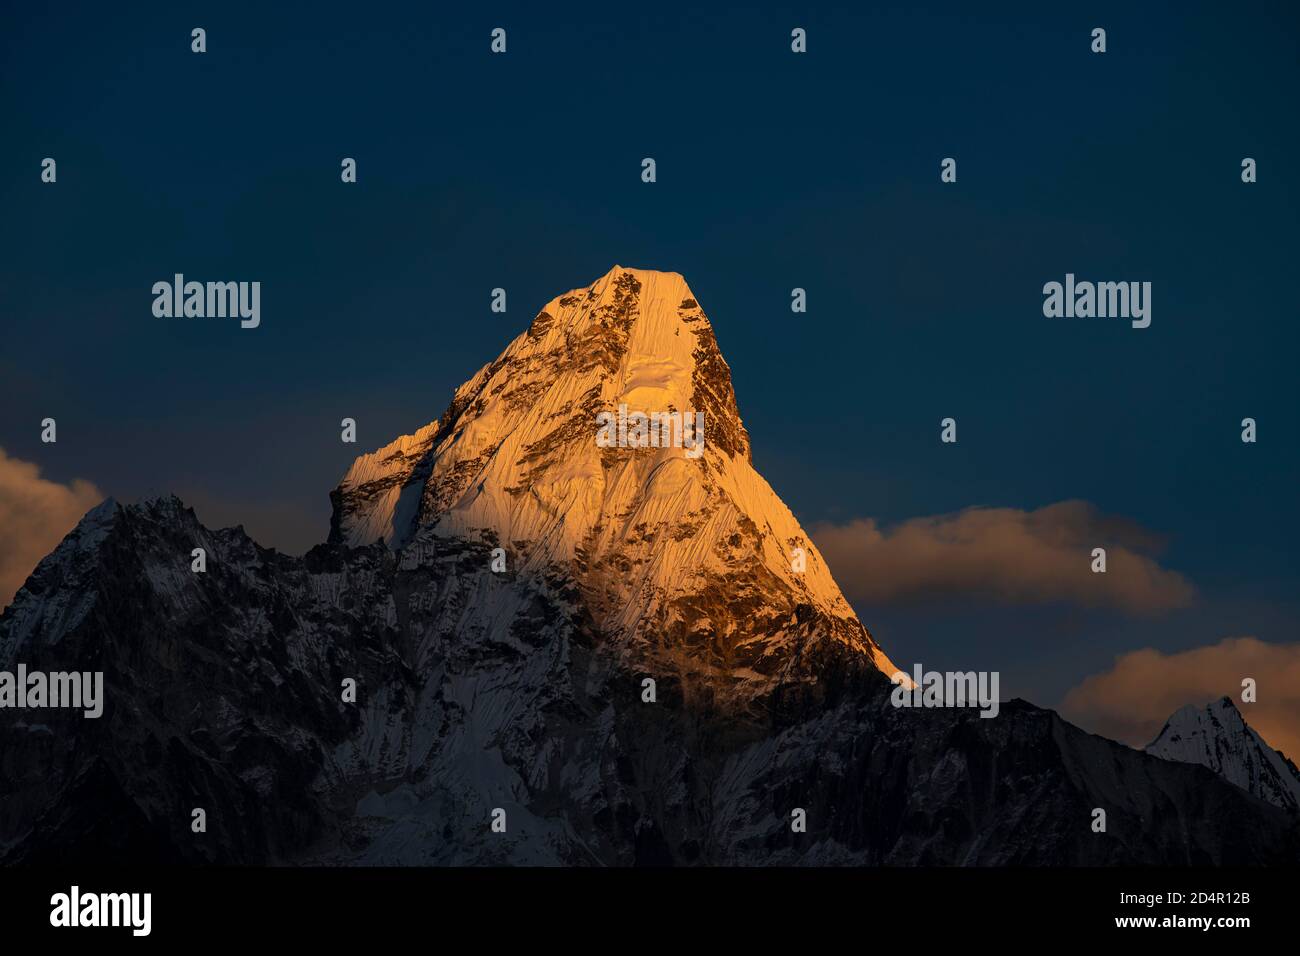 AMA Dablam 6812 m im Abendlicht, Matterhorn Nepal, Mahalangur Himal, Solu Khumbu, Nepal, Himalaya, Asien Stockfoto